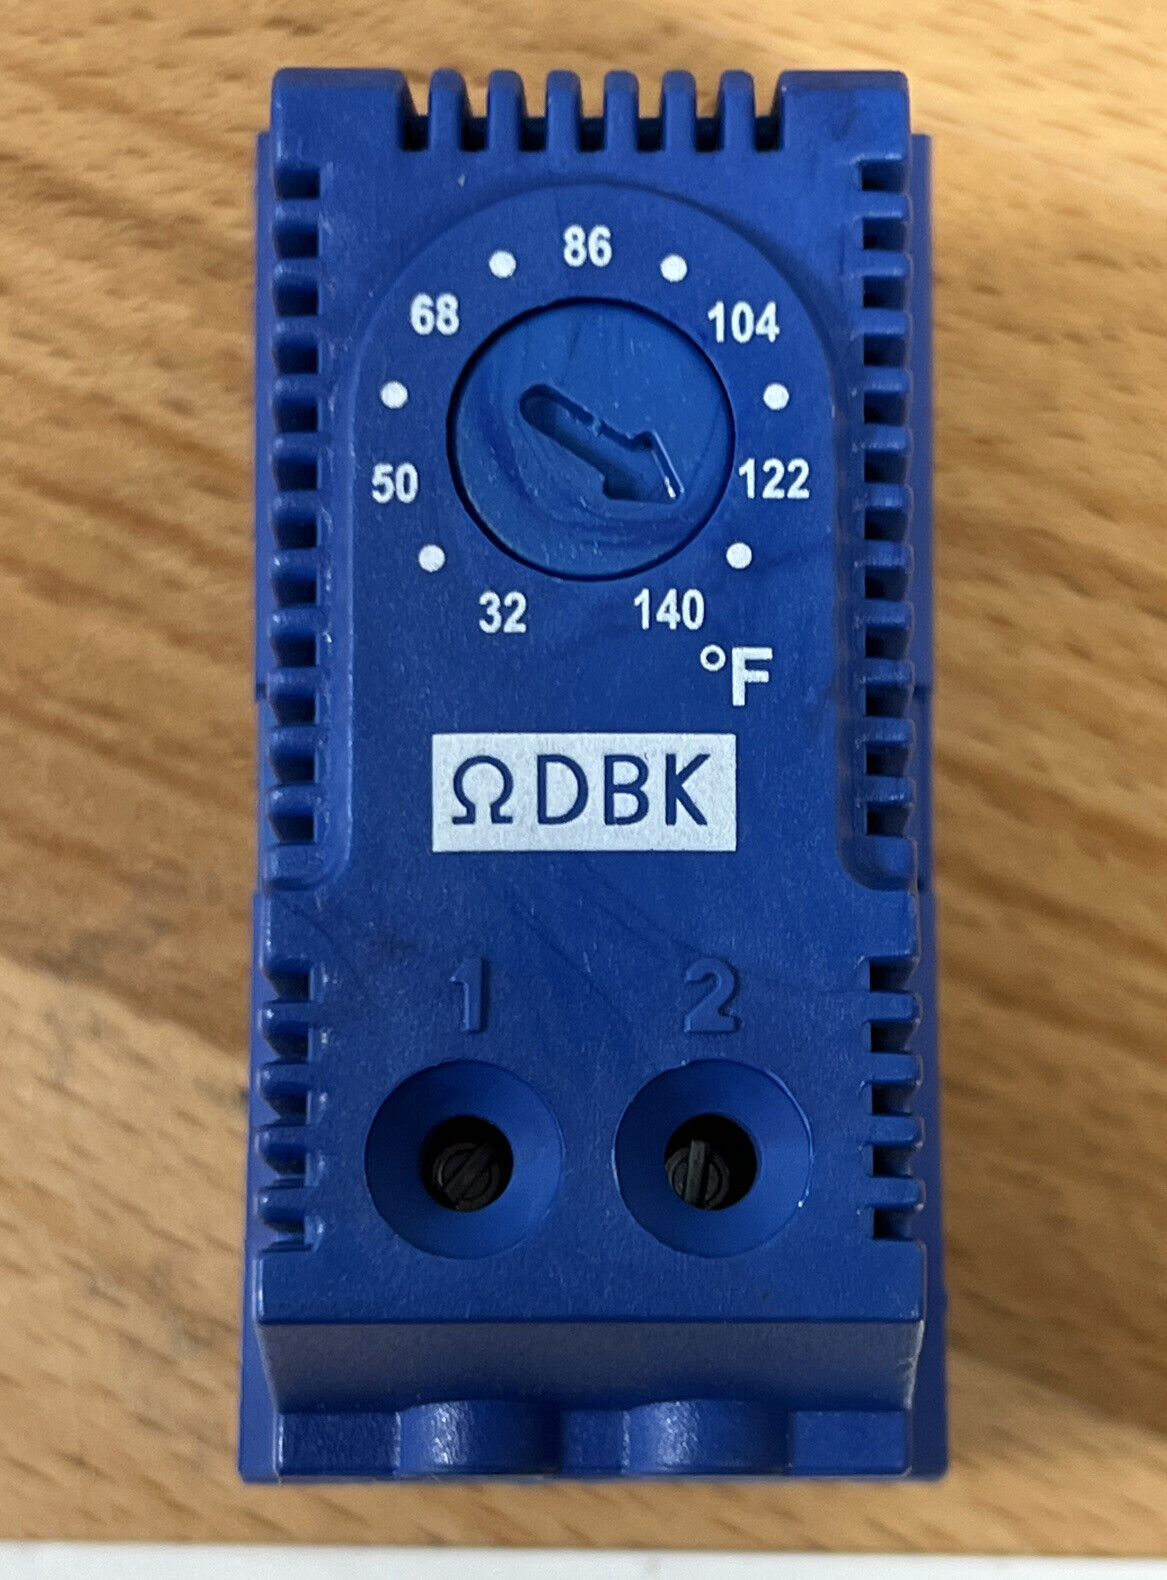 Omega DBK FGT201 Thermostat 32-140°F (GR109) - 0